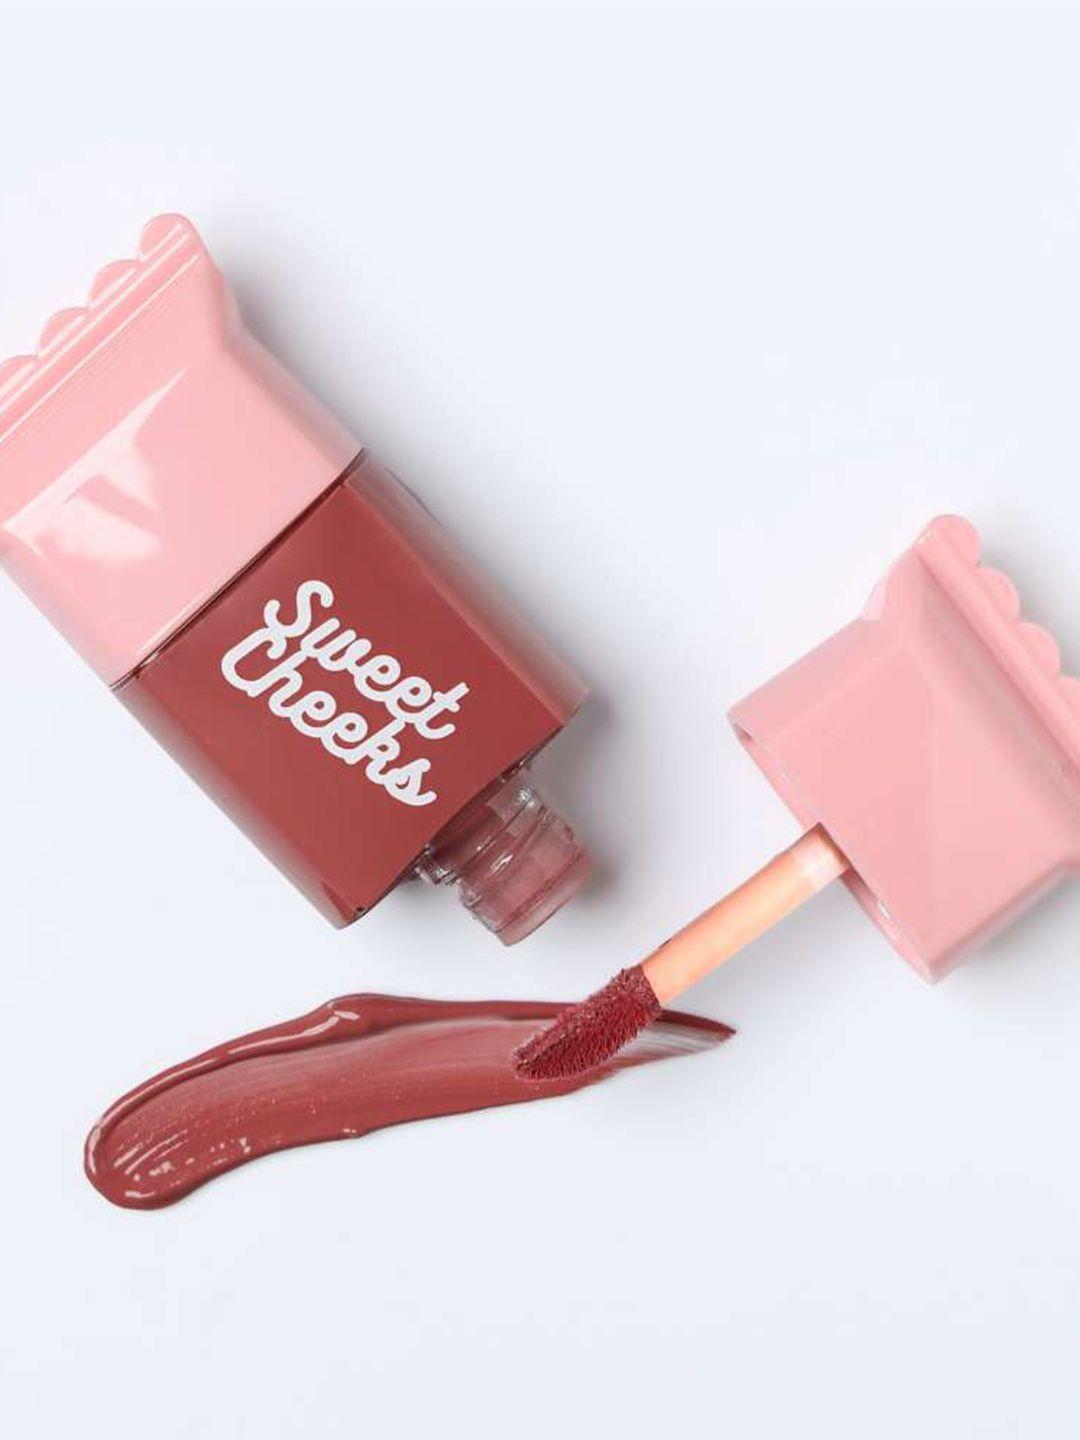 praush sweet cheeks ultra lightweight & buildable liquid blush 10g - mauve poppins